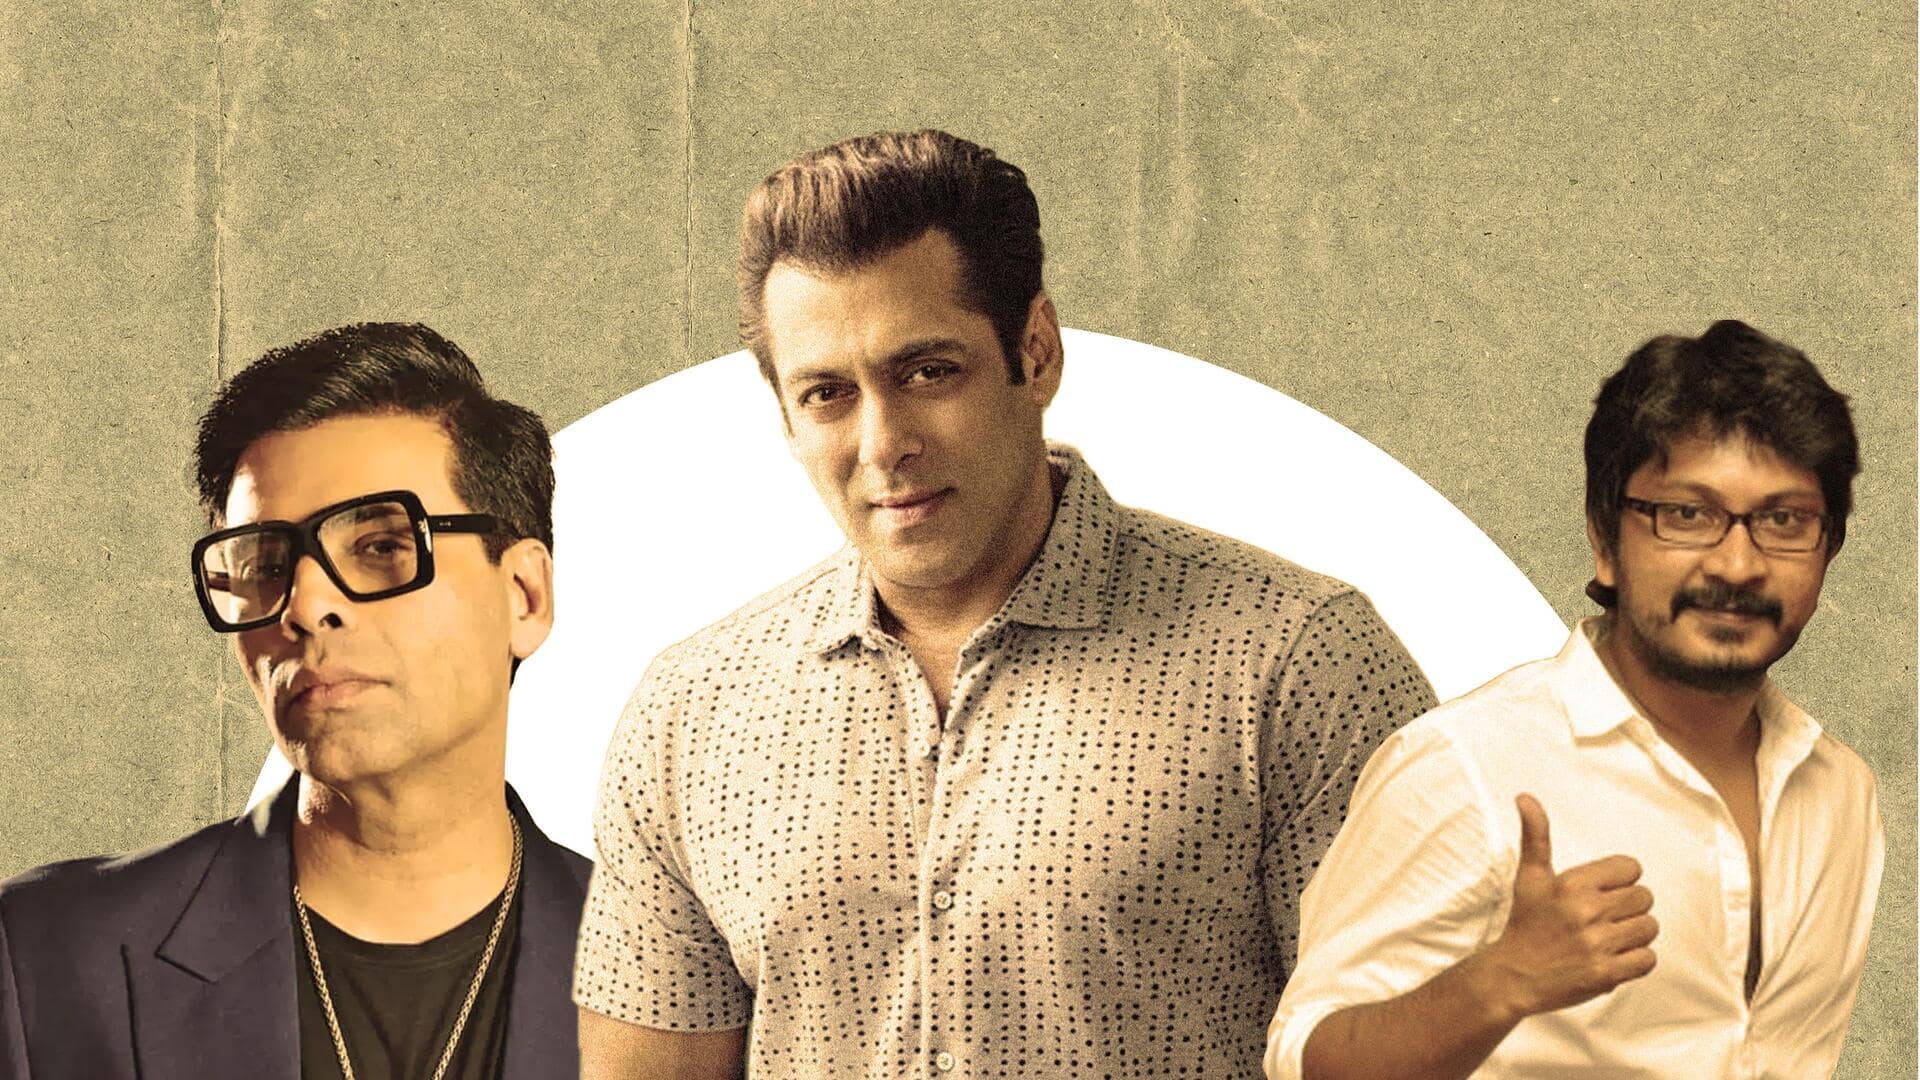 Salman Khan to play Army officer in Vishnuvardhan's film: Report